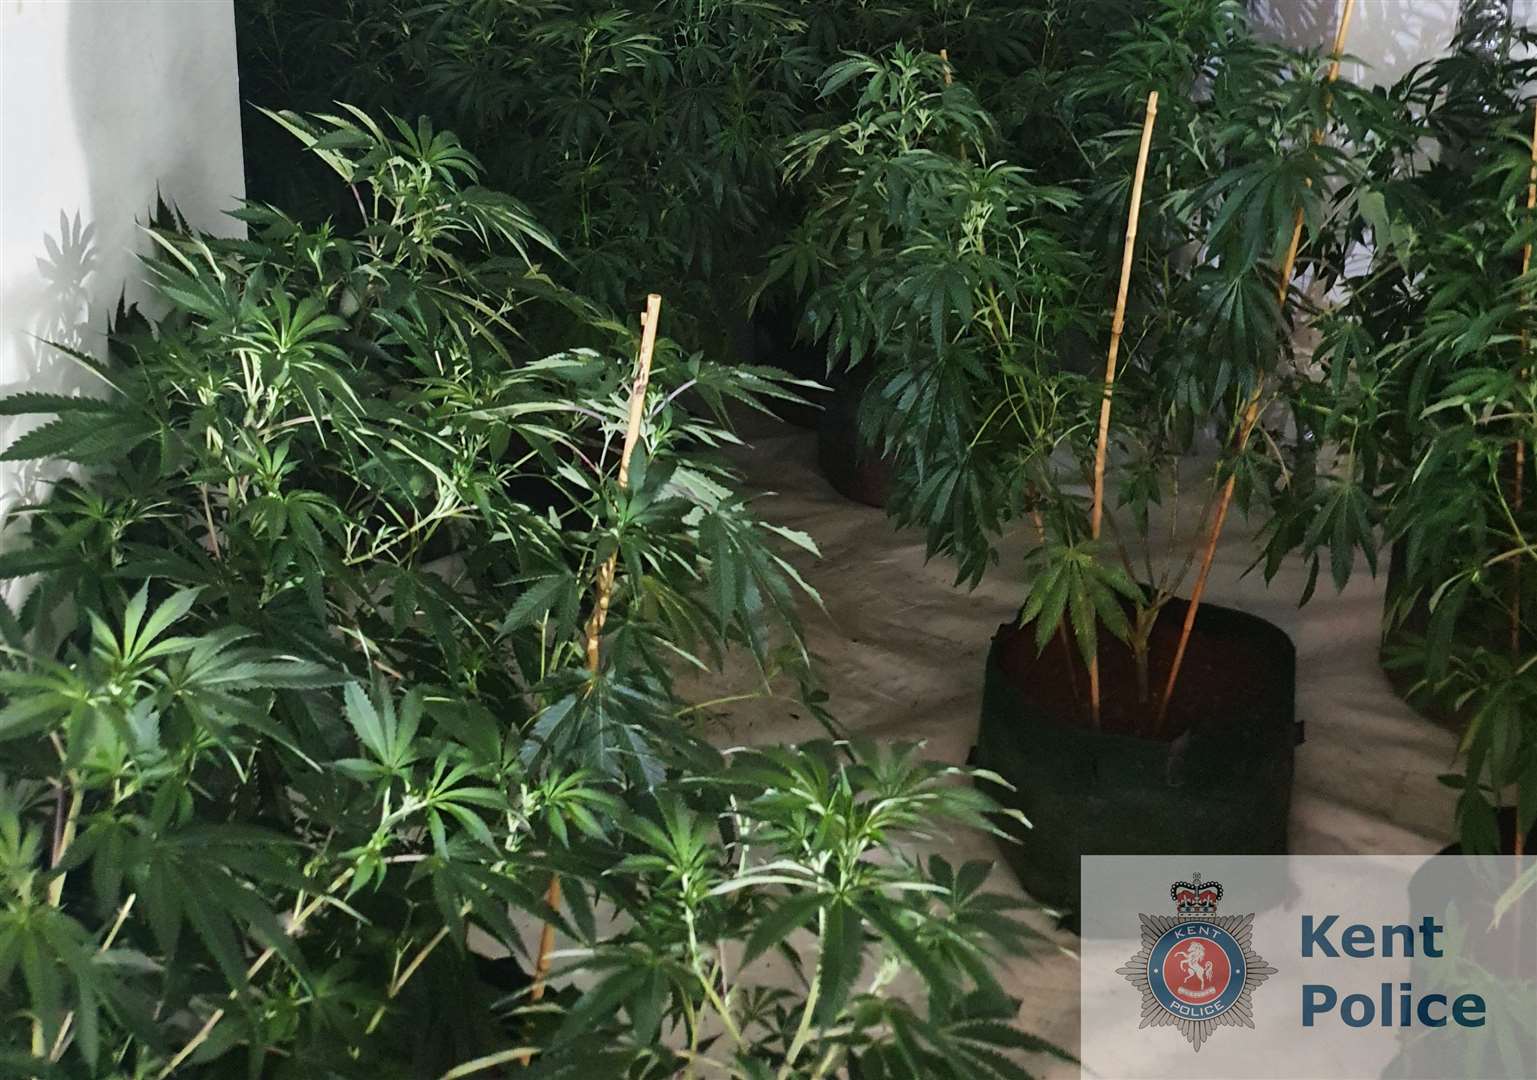 The raids uncovered cannabis farms